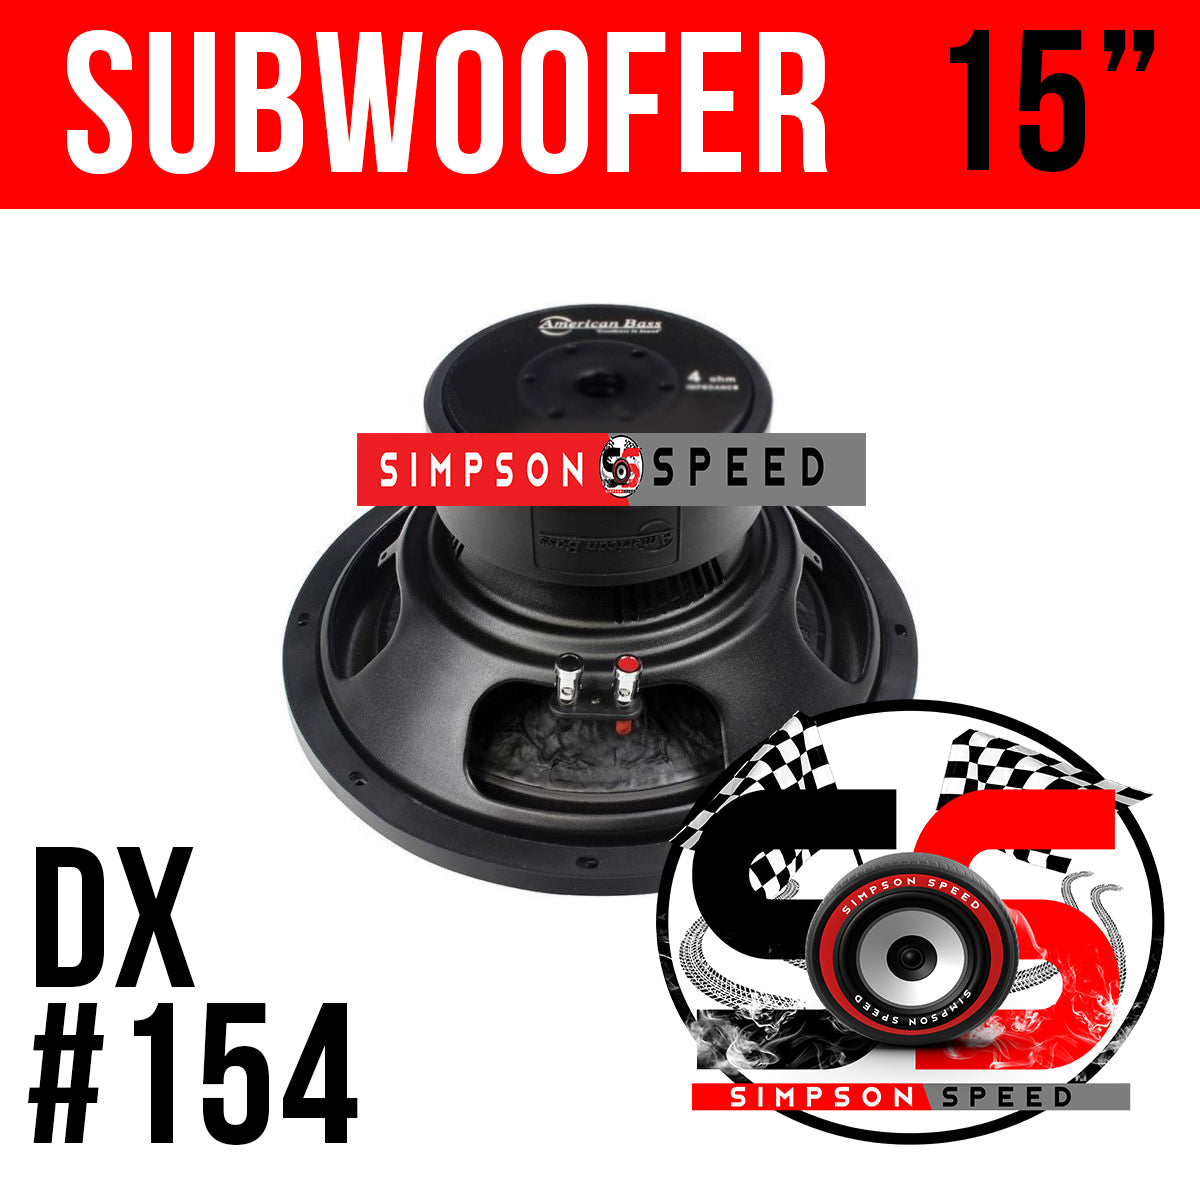 DX 15 American Bass Subwoofer